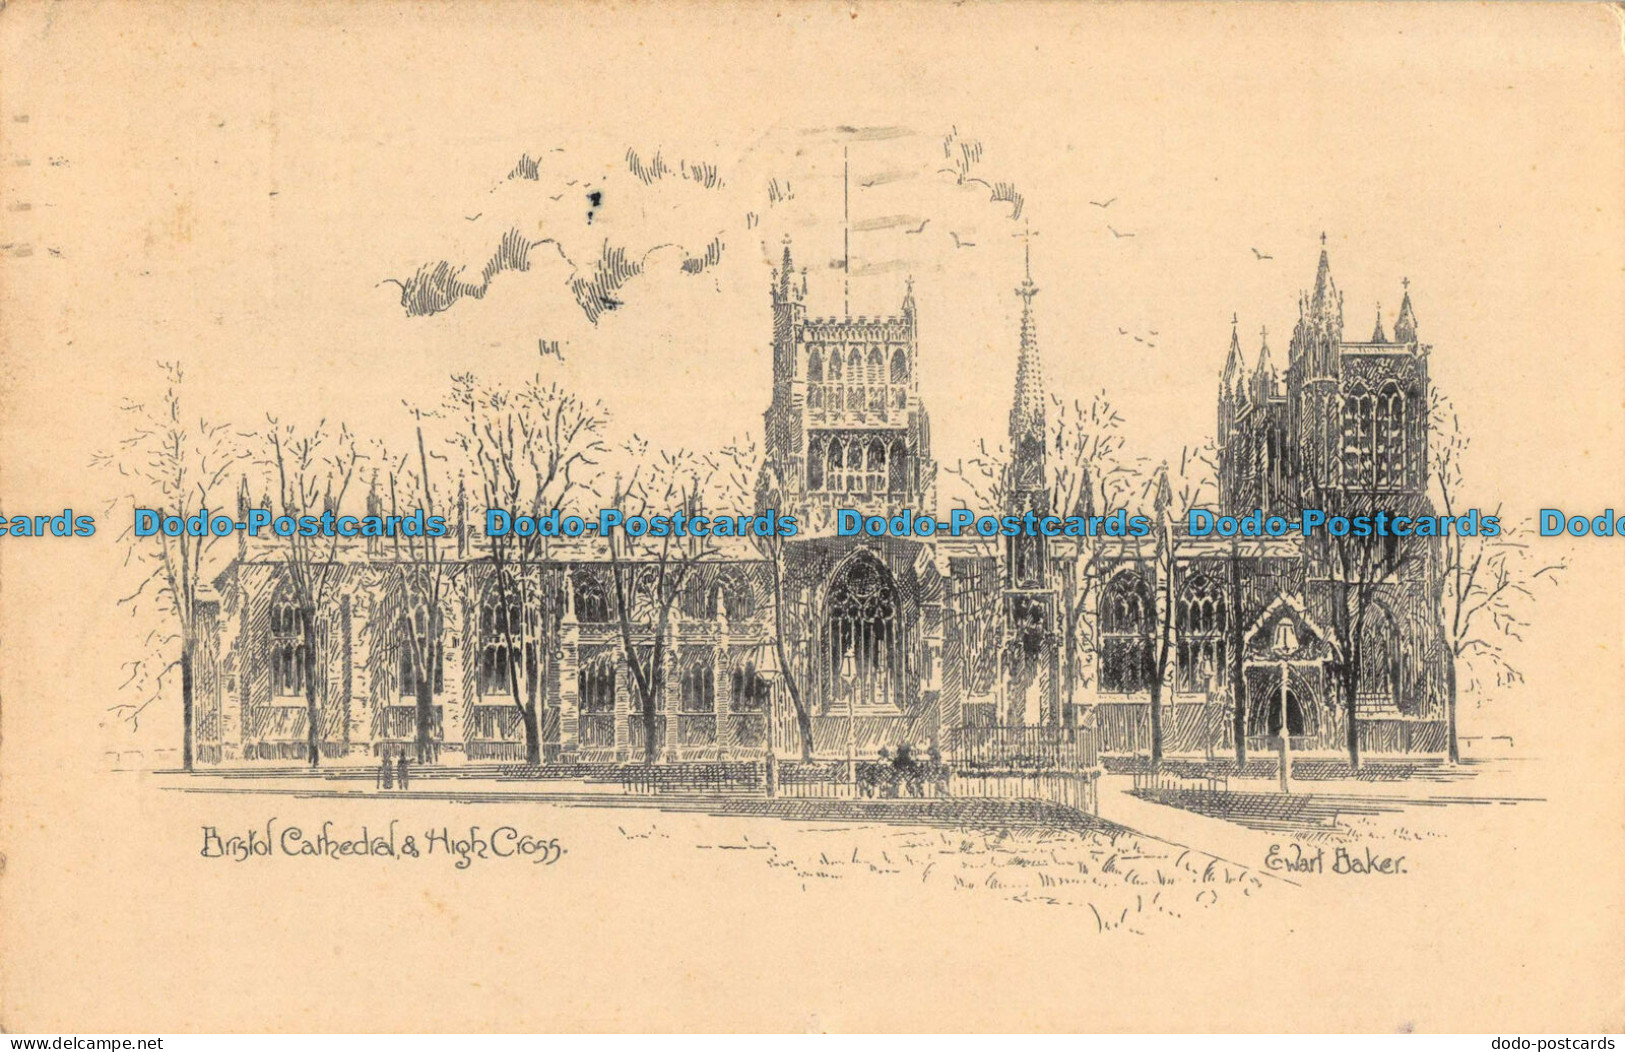 R042226 Bristol Cathedral A High Cross. Evart Baker. 1928 - World